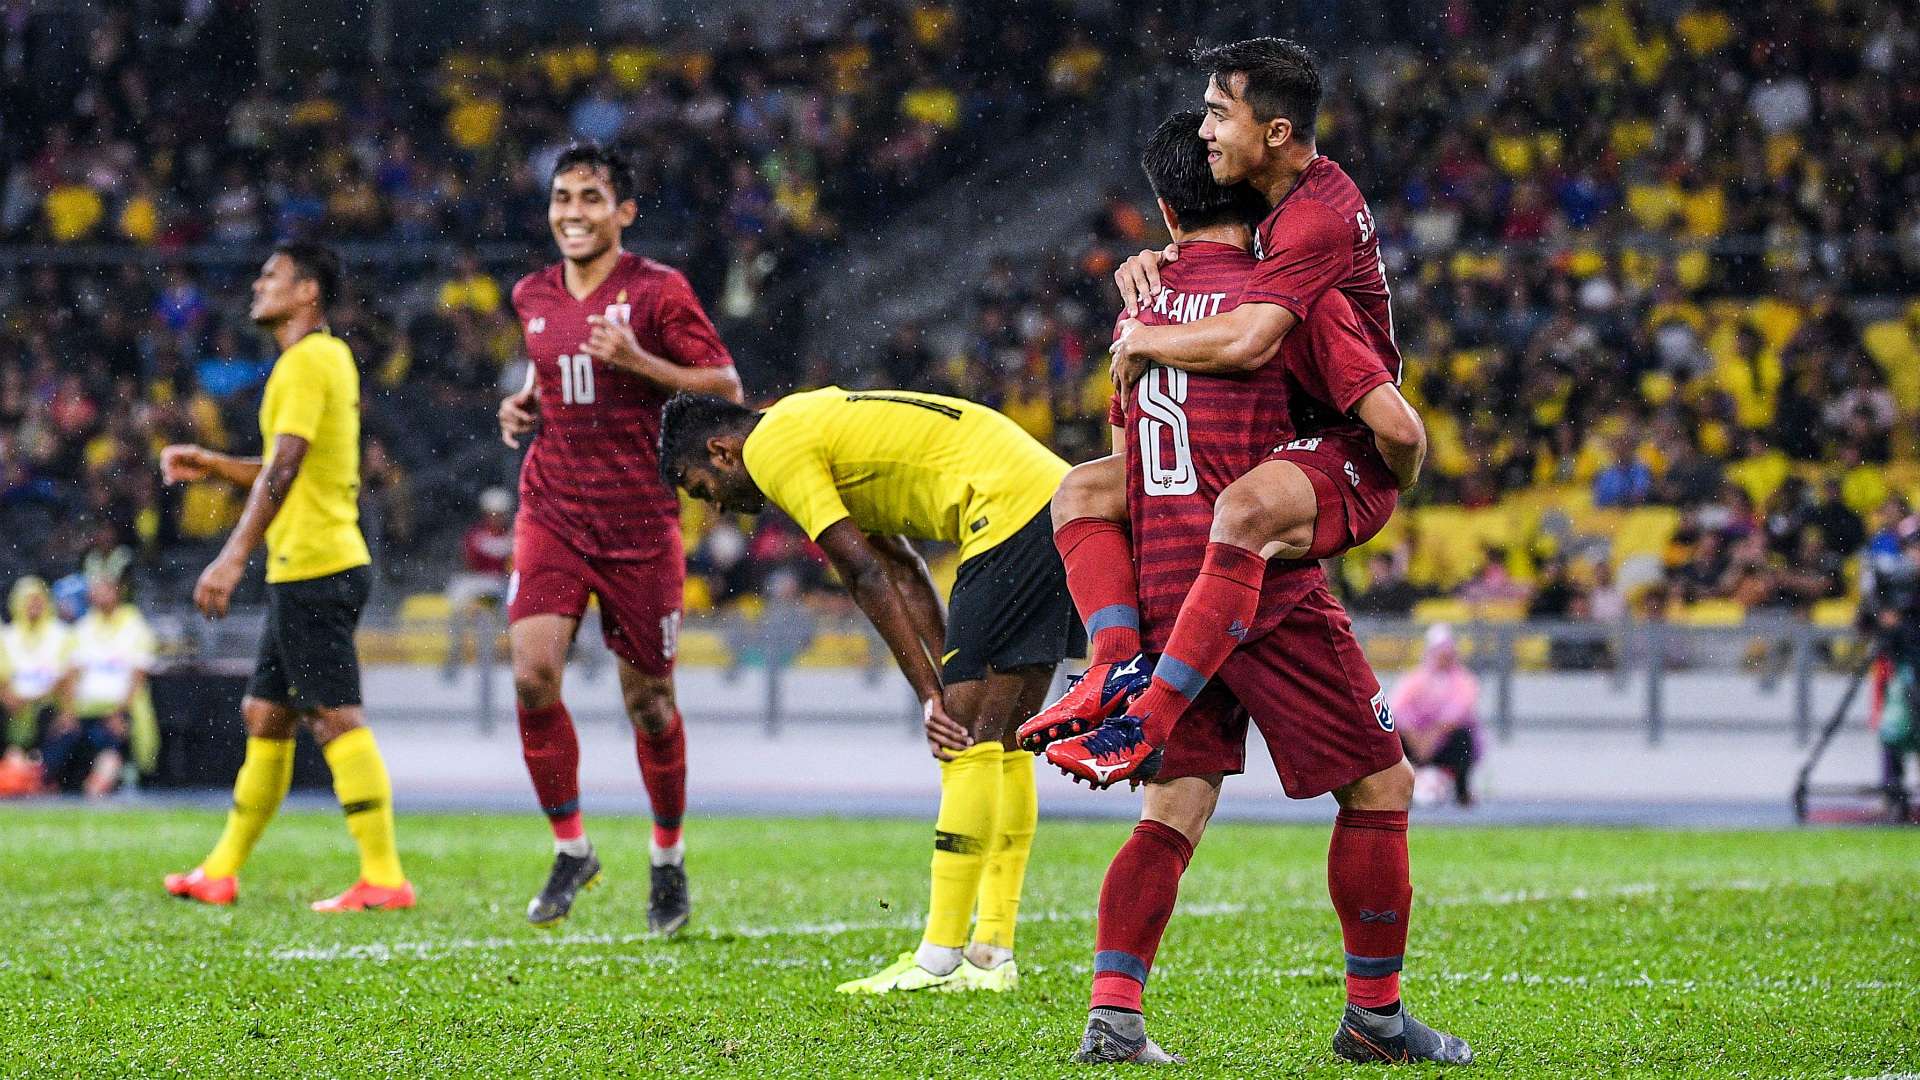 Chanatip Songkrasin, Malaysia v Thailand, 2022 World Cup qualifier, 14 Nov 2019